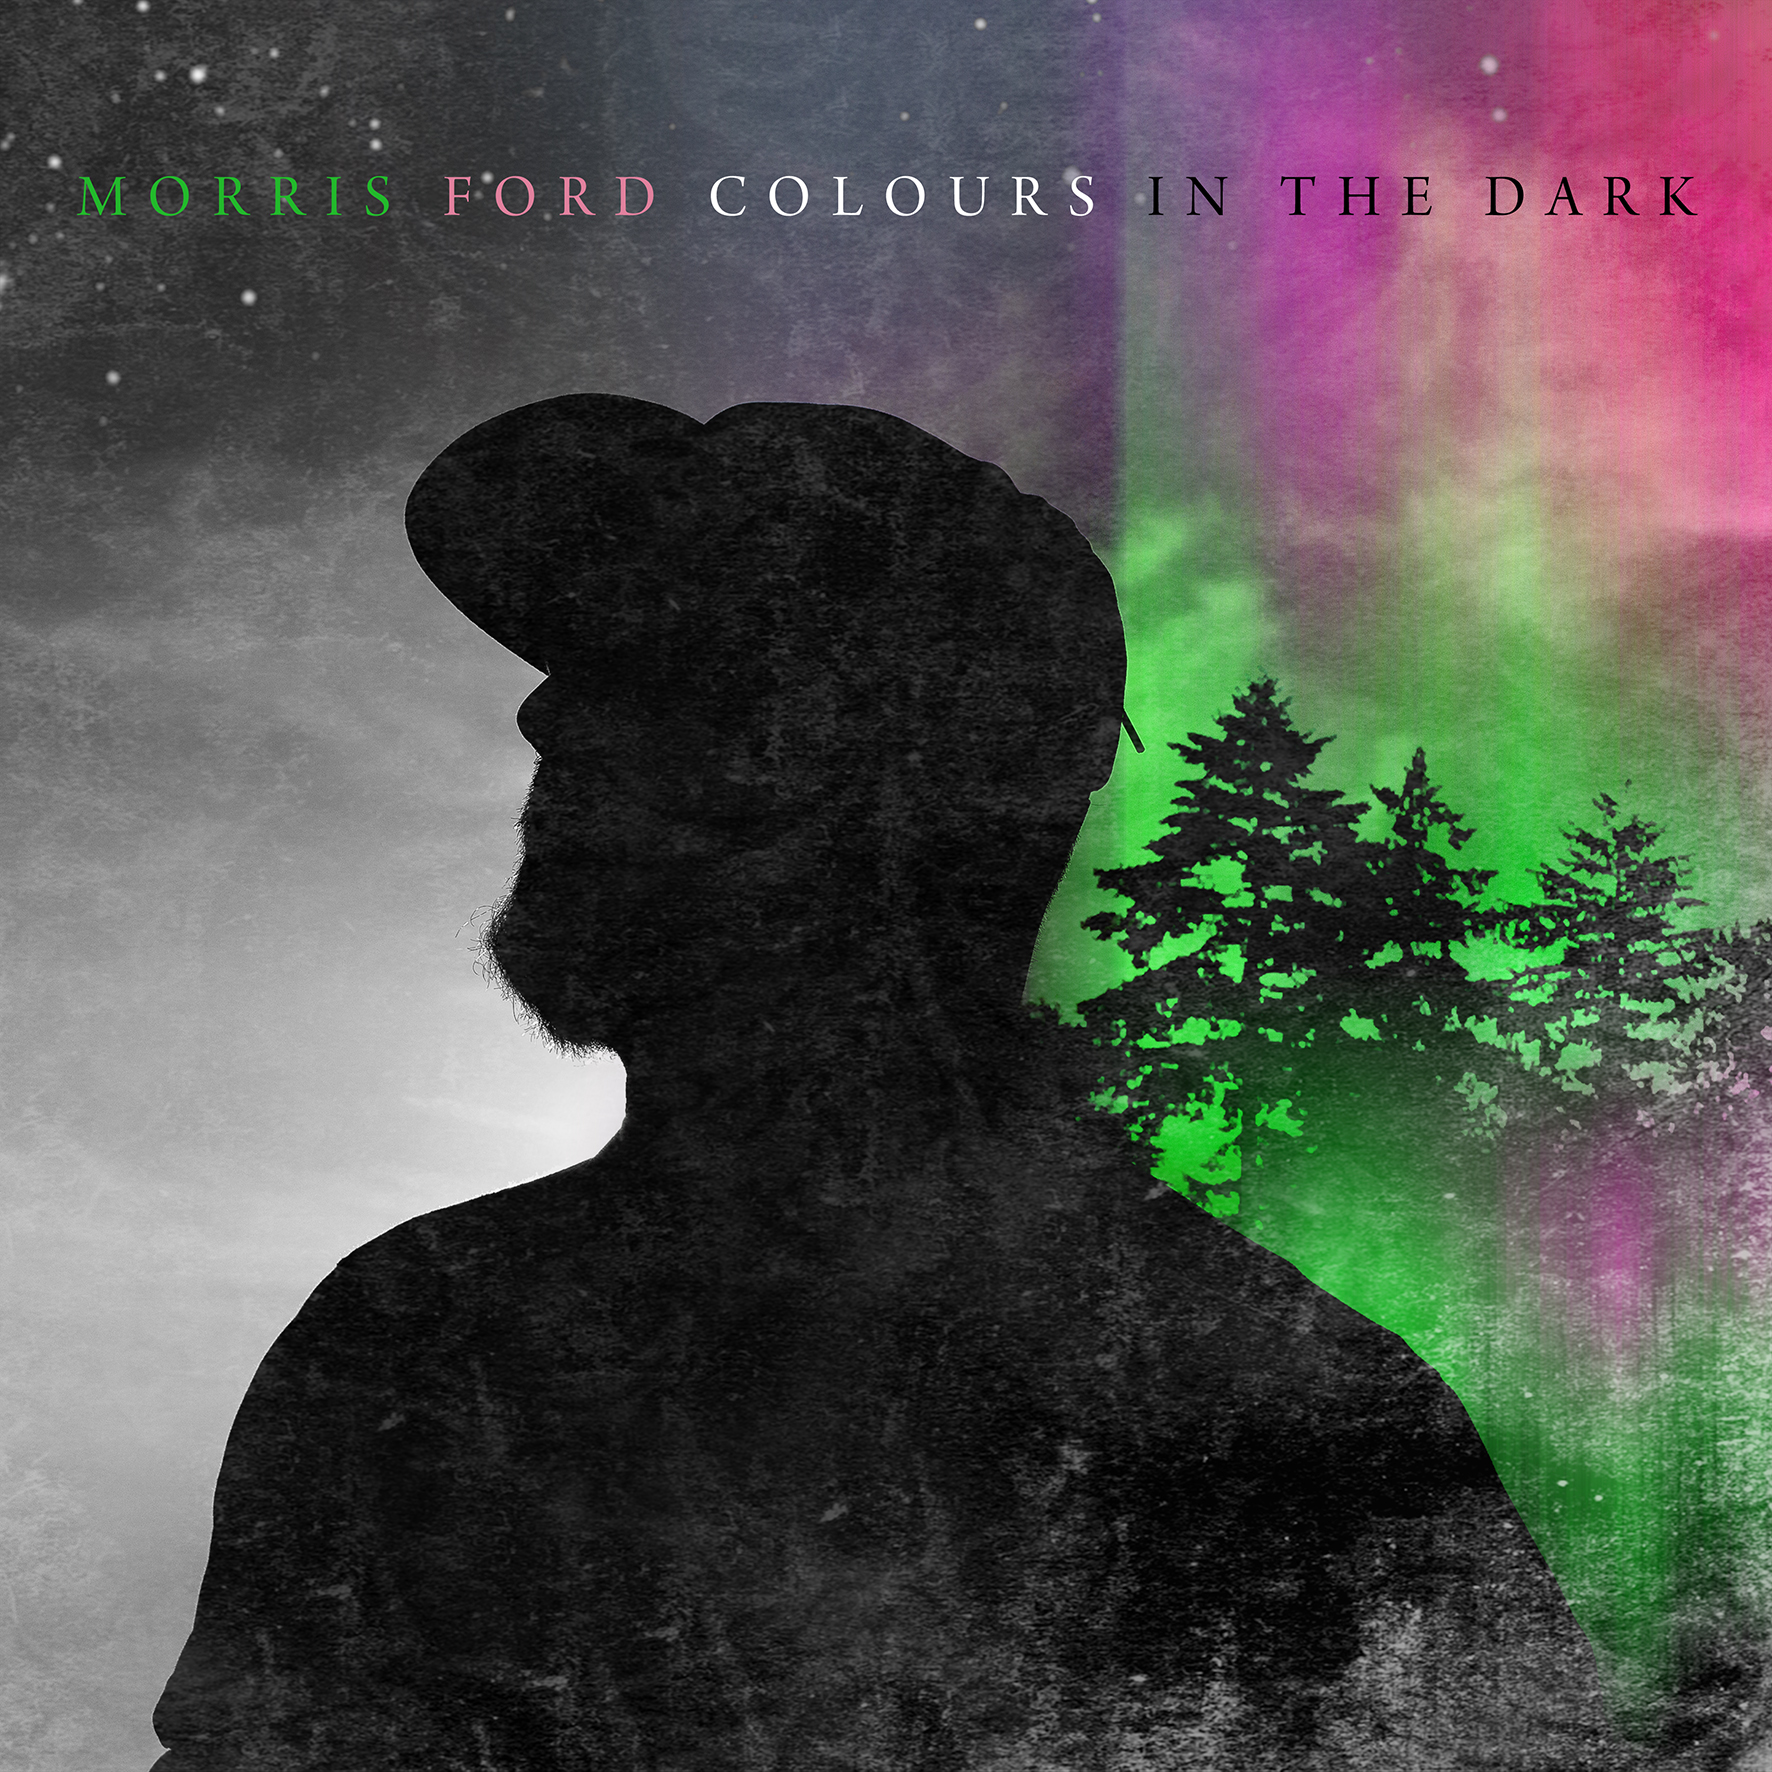 Album cover design for Morris Ford's 'Colours in the Dark'